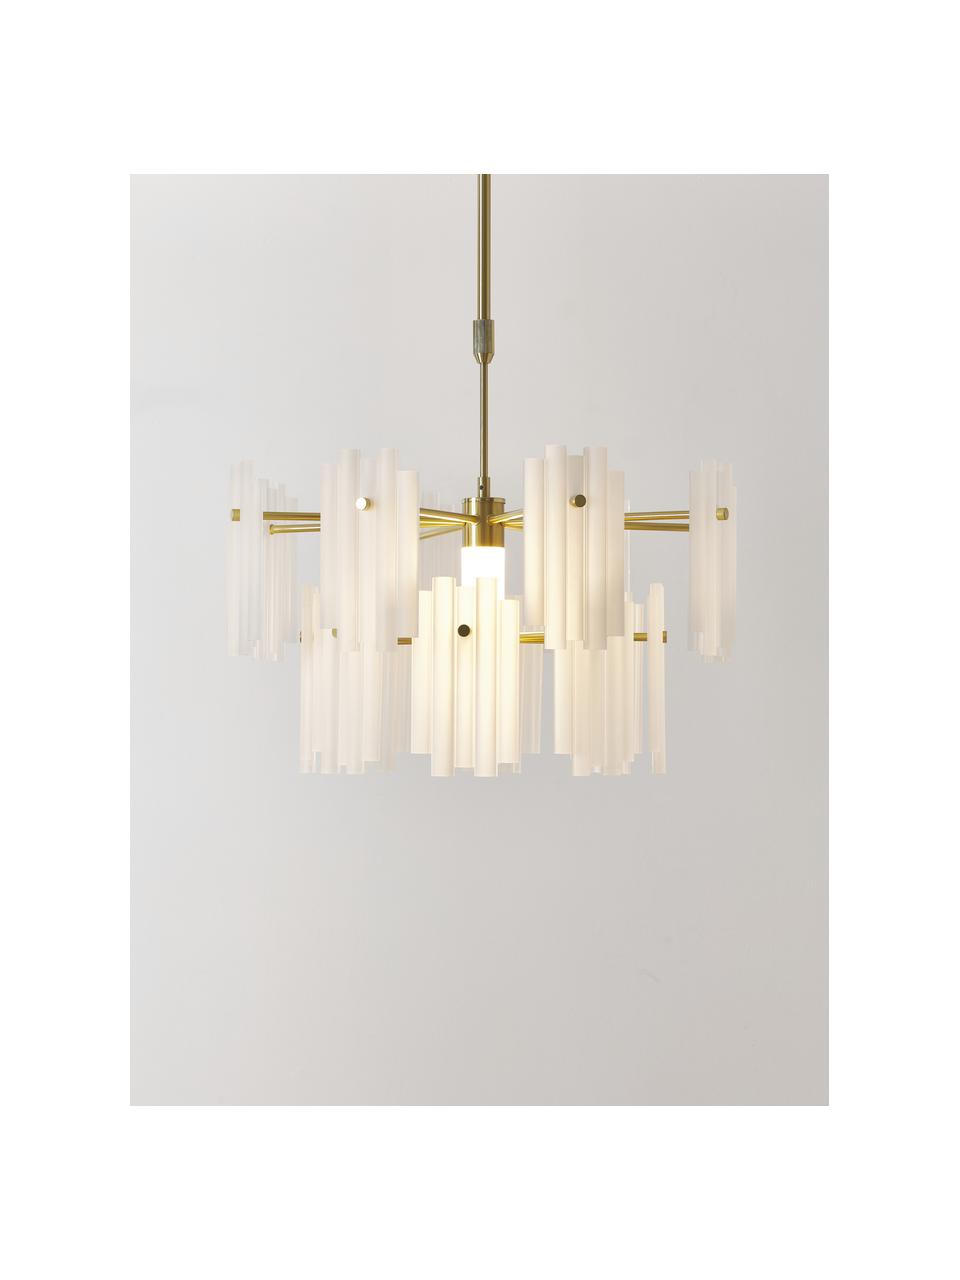 Grosse LED-Pendelleuchte Alenia, Lampenschirm: Acrylglas, Weiss, Goldfarben, Ø 61 x H 98 cm